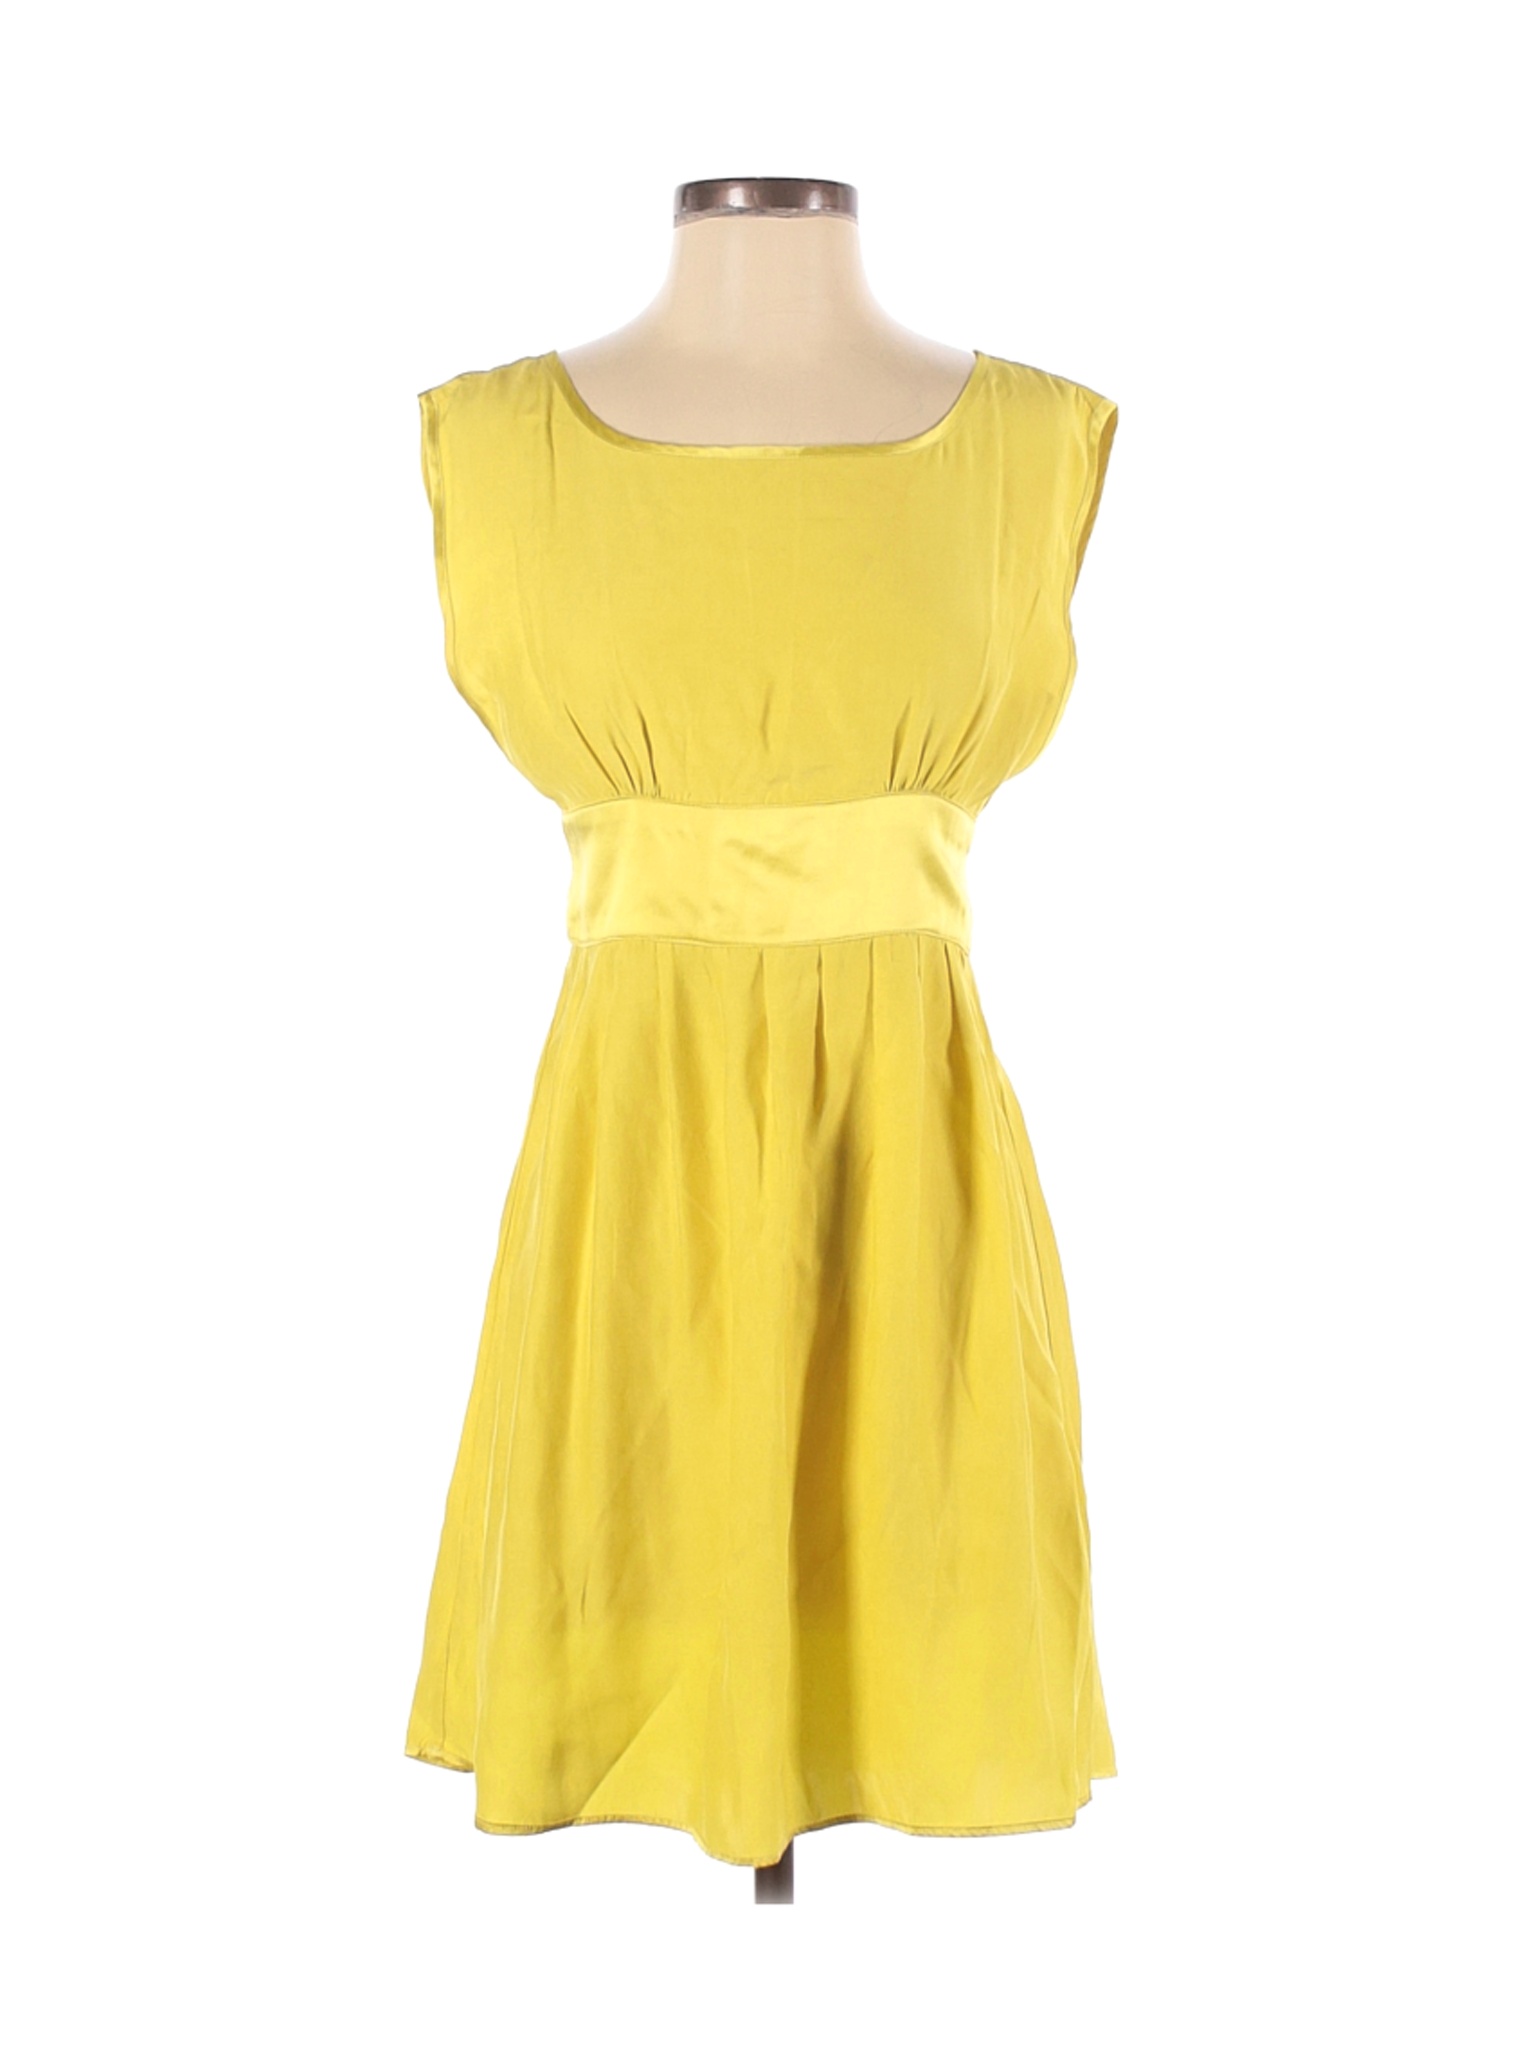 For Joseph Women Yellow Casual Dress XS | eBay